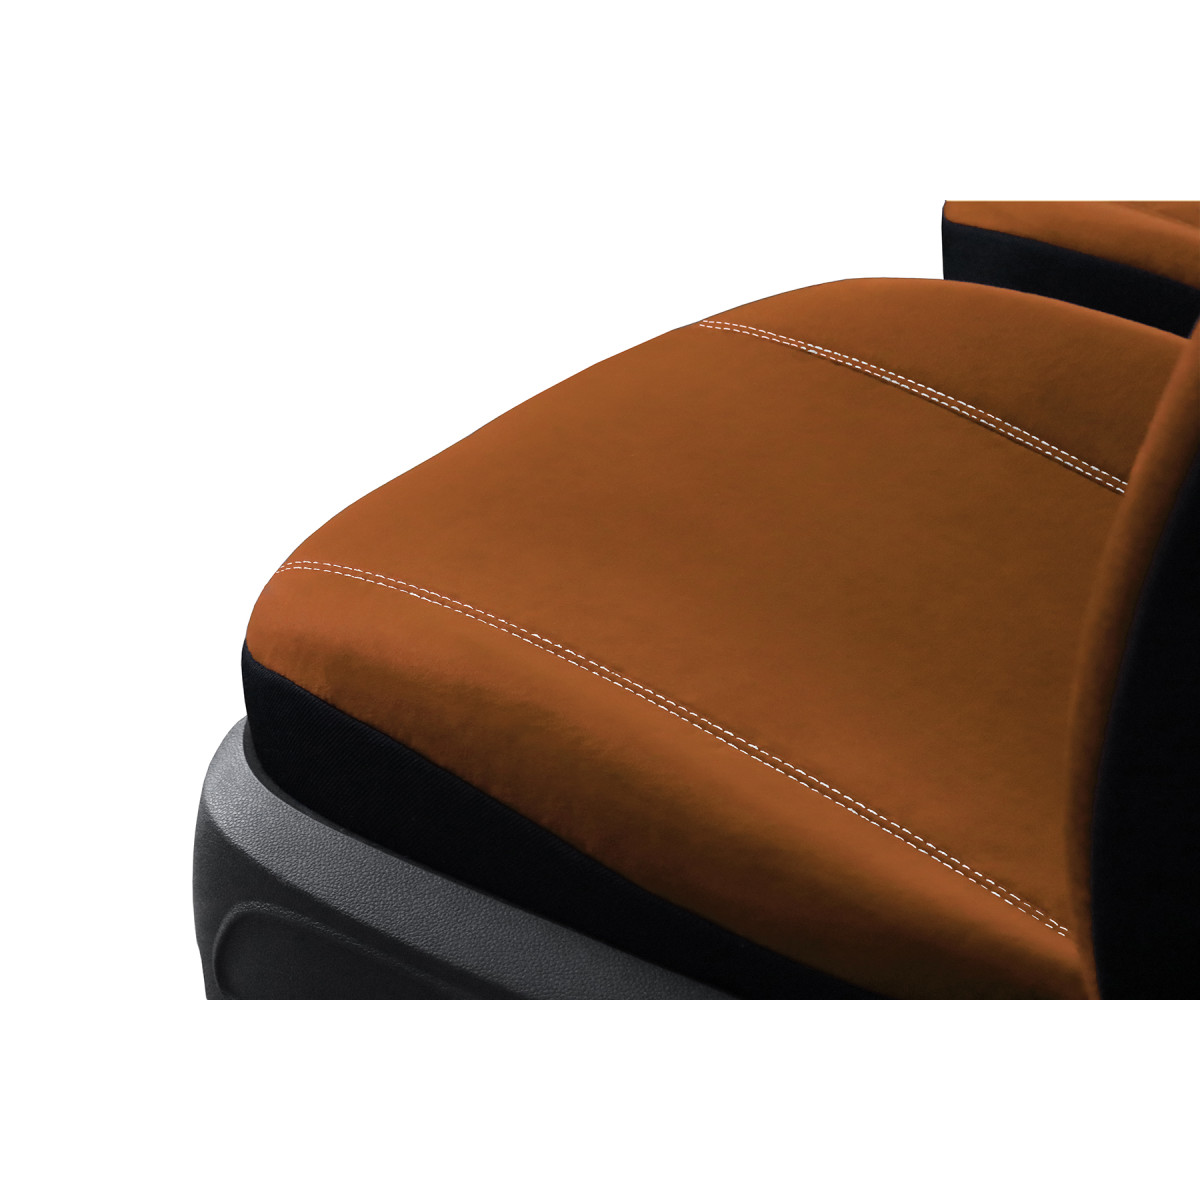 https://www.openauto.de/image/cache/catalog/products/4d43cec3d9d129dca1ebeffeb43c30bf/cozy-cozy-alcantara-brown-front-seat-zoomed-1200x1200.jpg